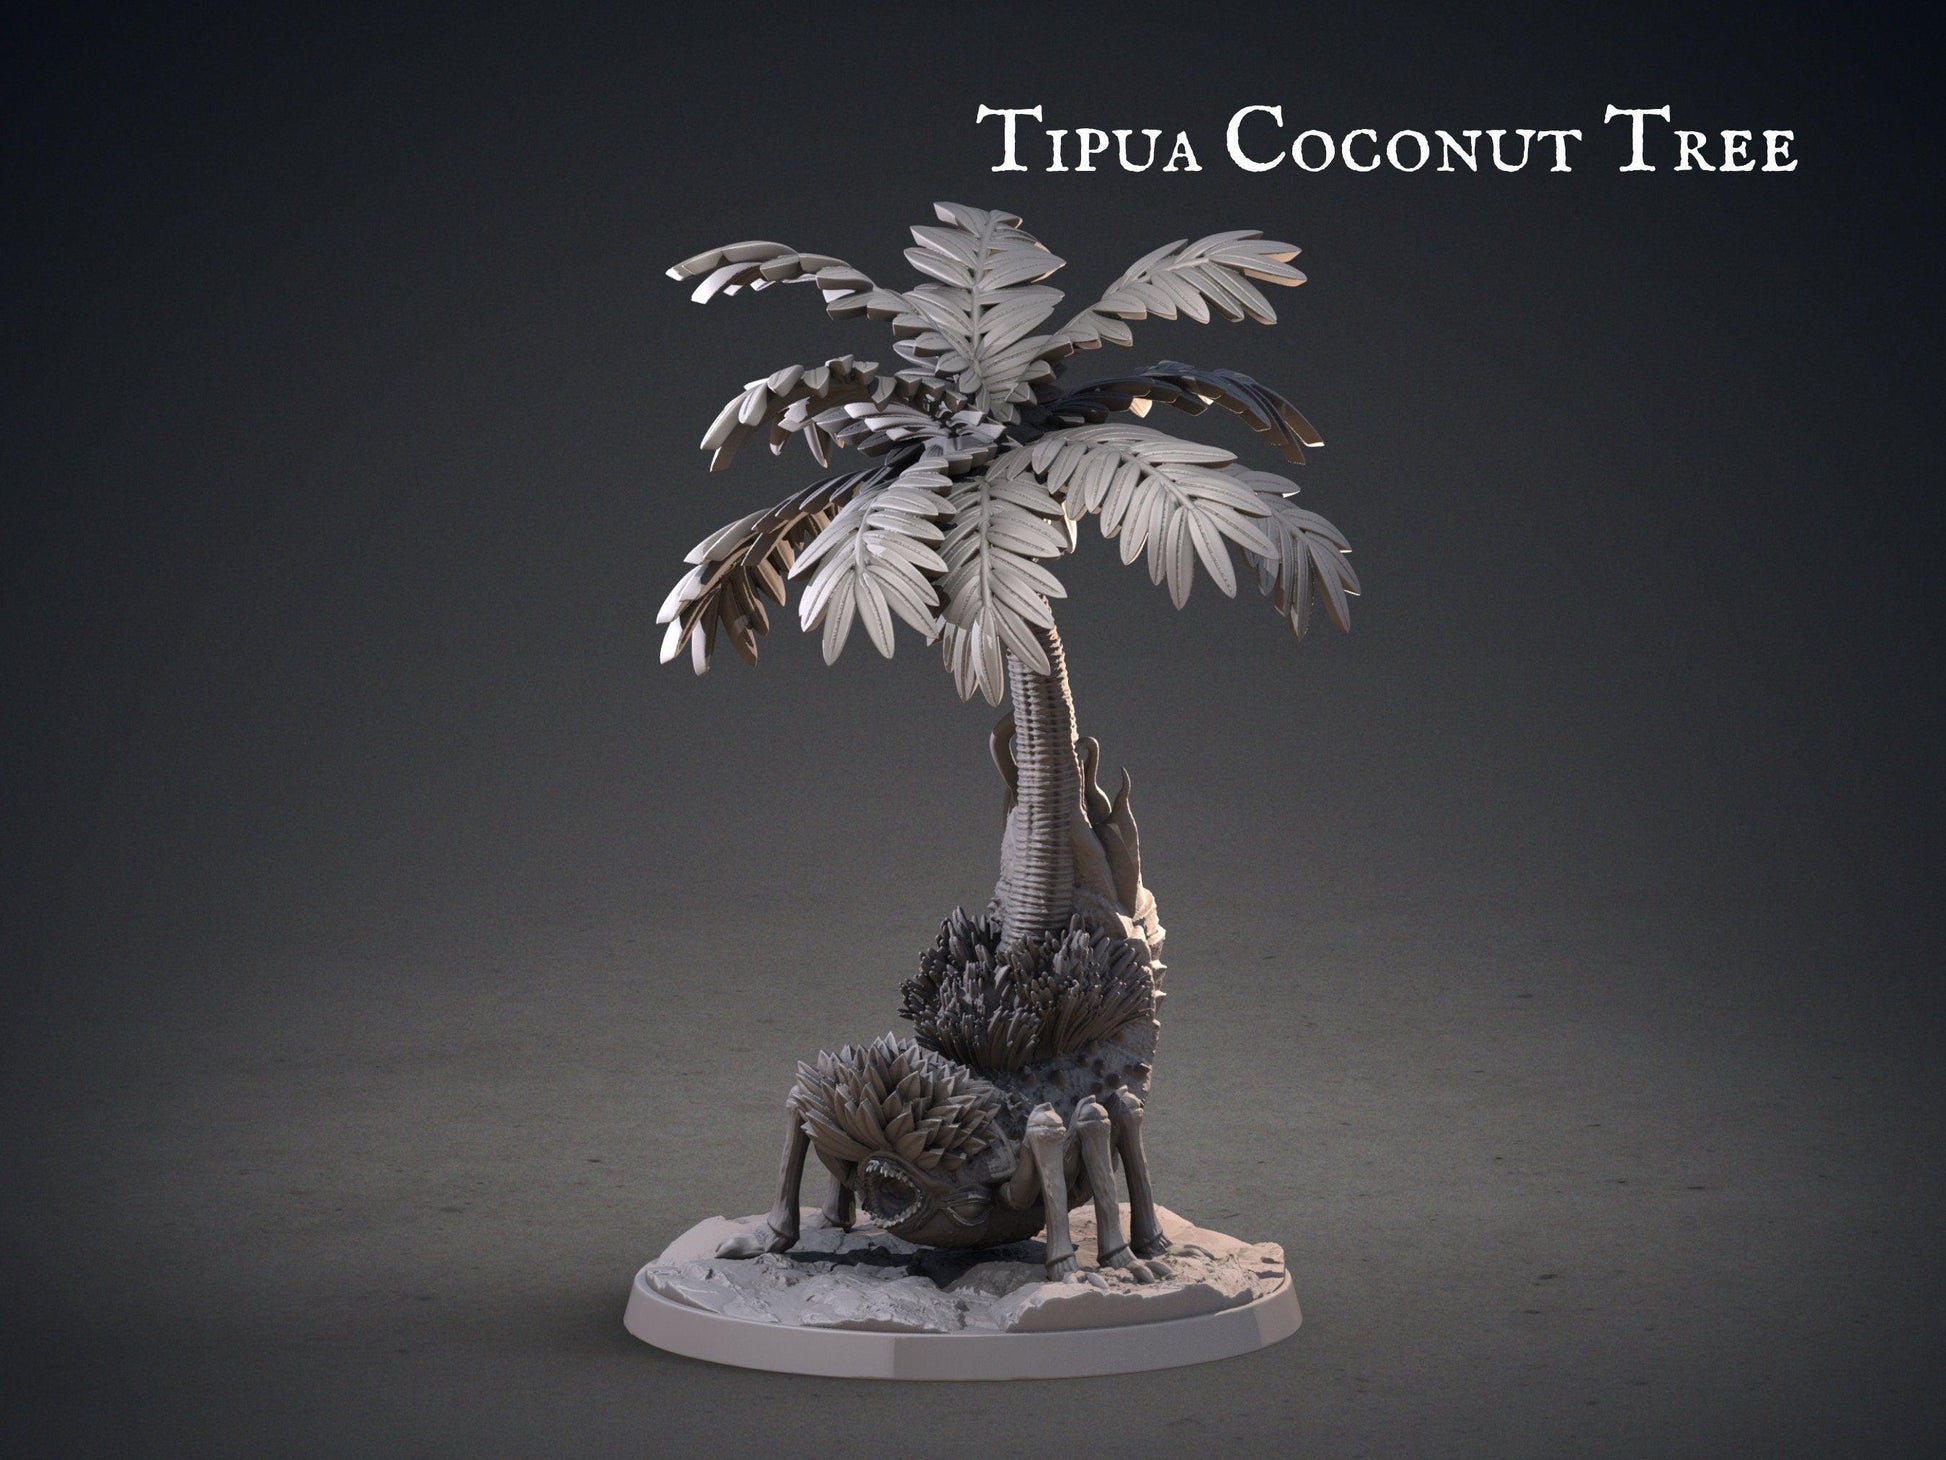 Tipua Coconut Tree Miniature DnD | Clay Cyanide | Maori miniature | Tabletop Gaming | DnD Miniature | Dungeons and Dragons | dnd terrain - Plague Miniatures shop for DnD Miniatures